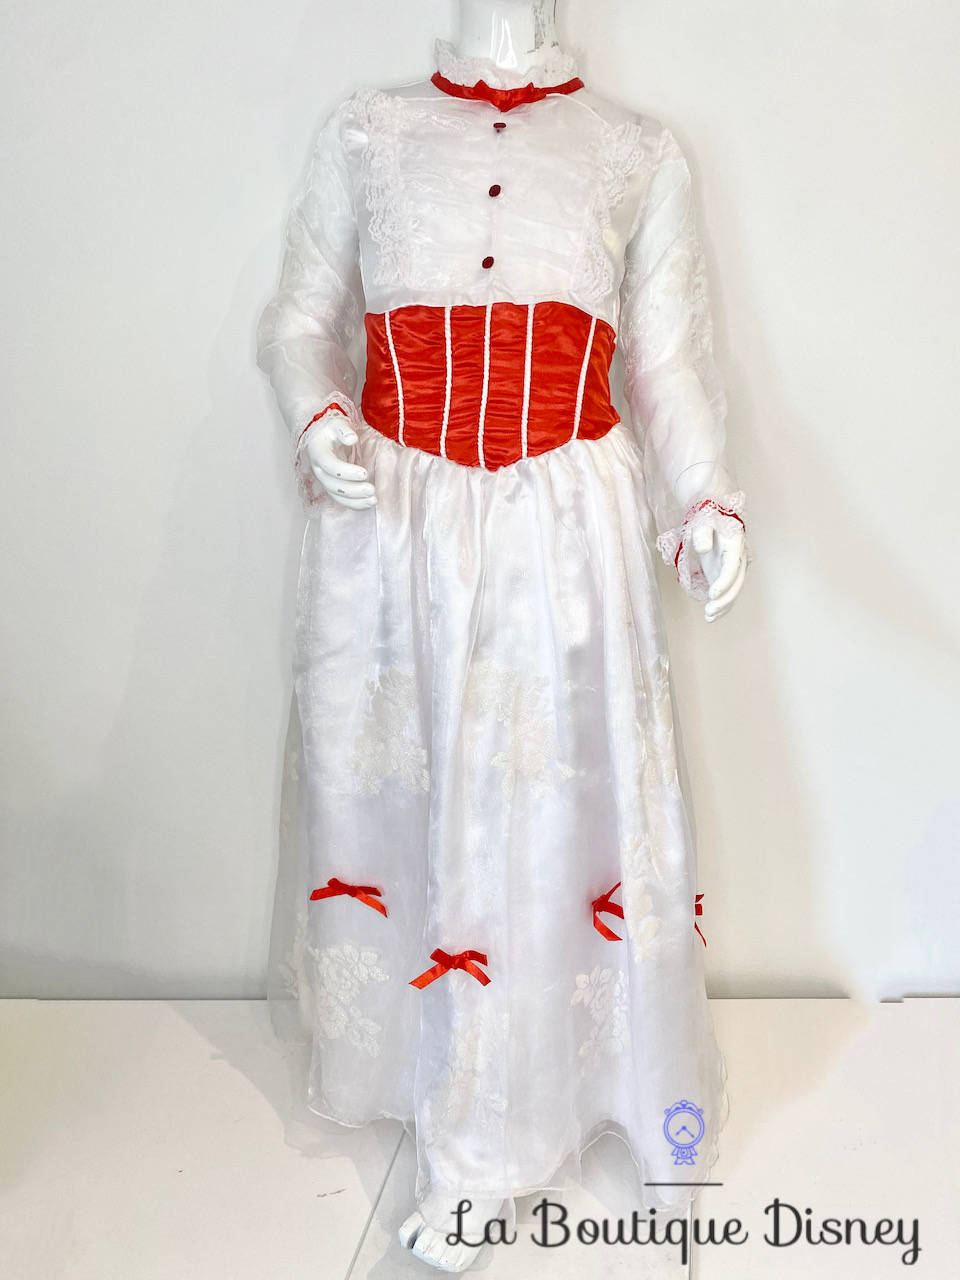 Déguisement Mary Poppins Disneyland Paris Disney taille 12 ans robe blanc rouge dentelle